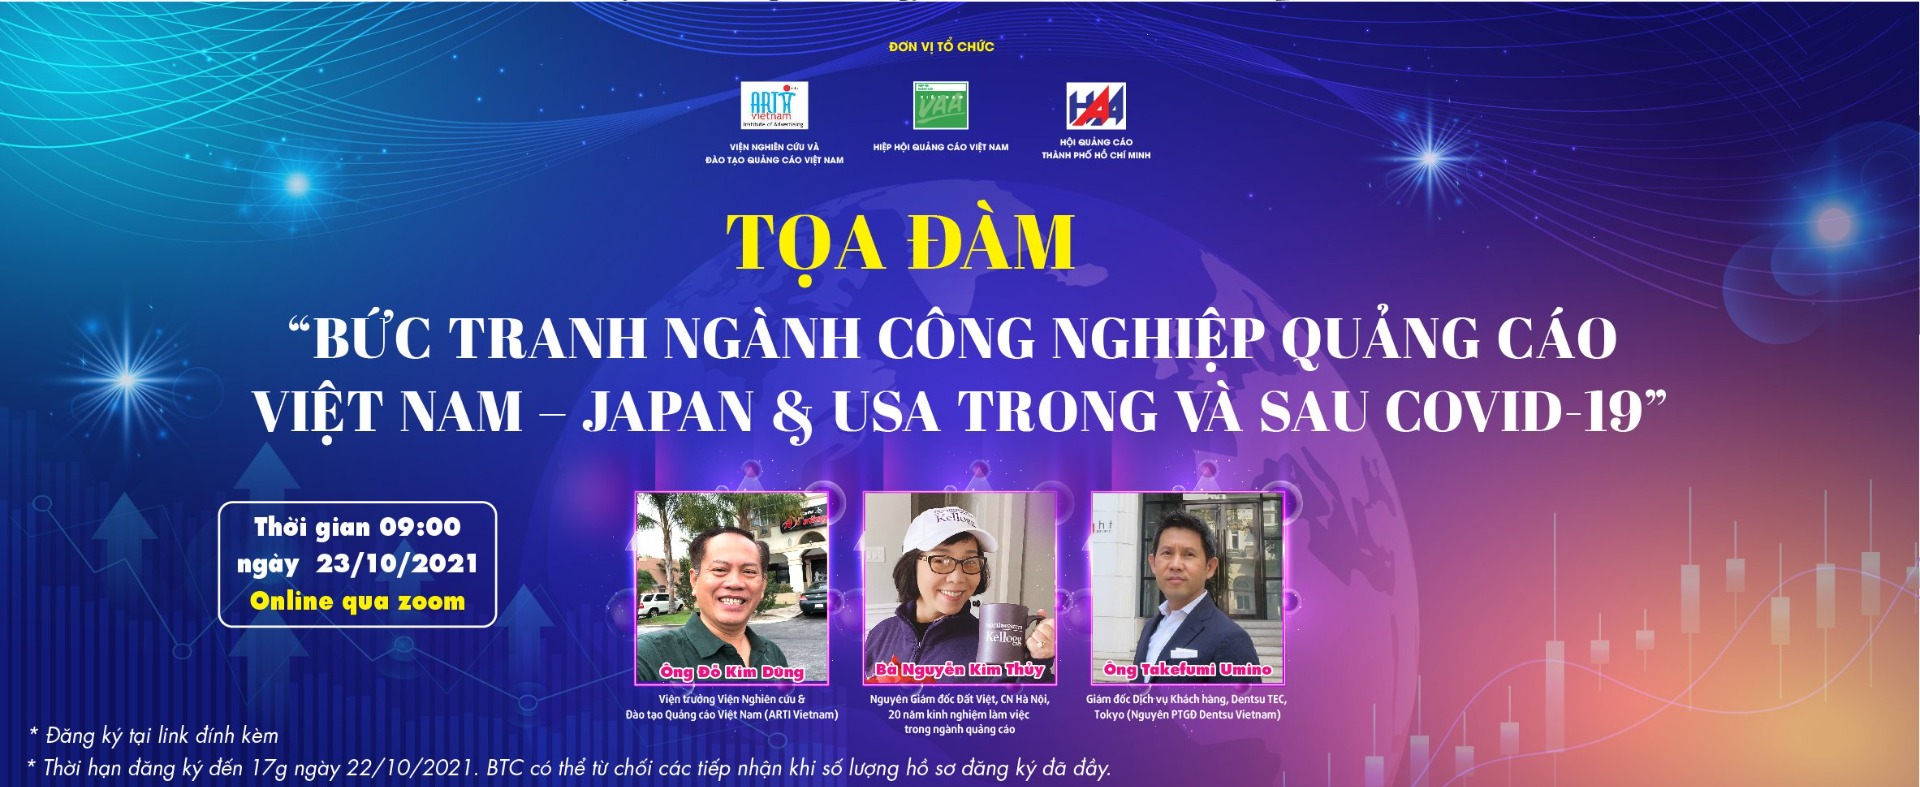 Toa Dam "Buc Tranh Nganh Cong Nghiep  Quang Cao Viet Nam - Japan & USA Trong Va Sau Covid 19"